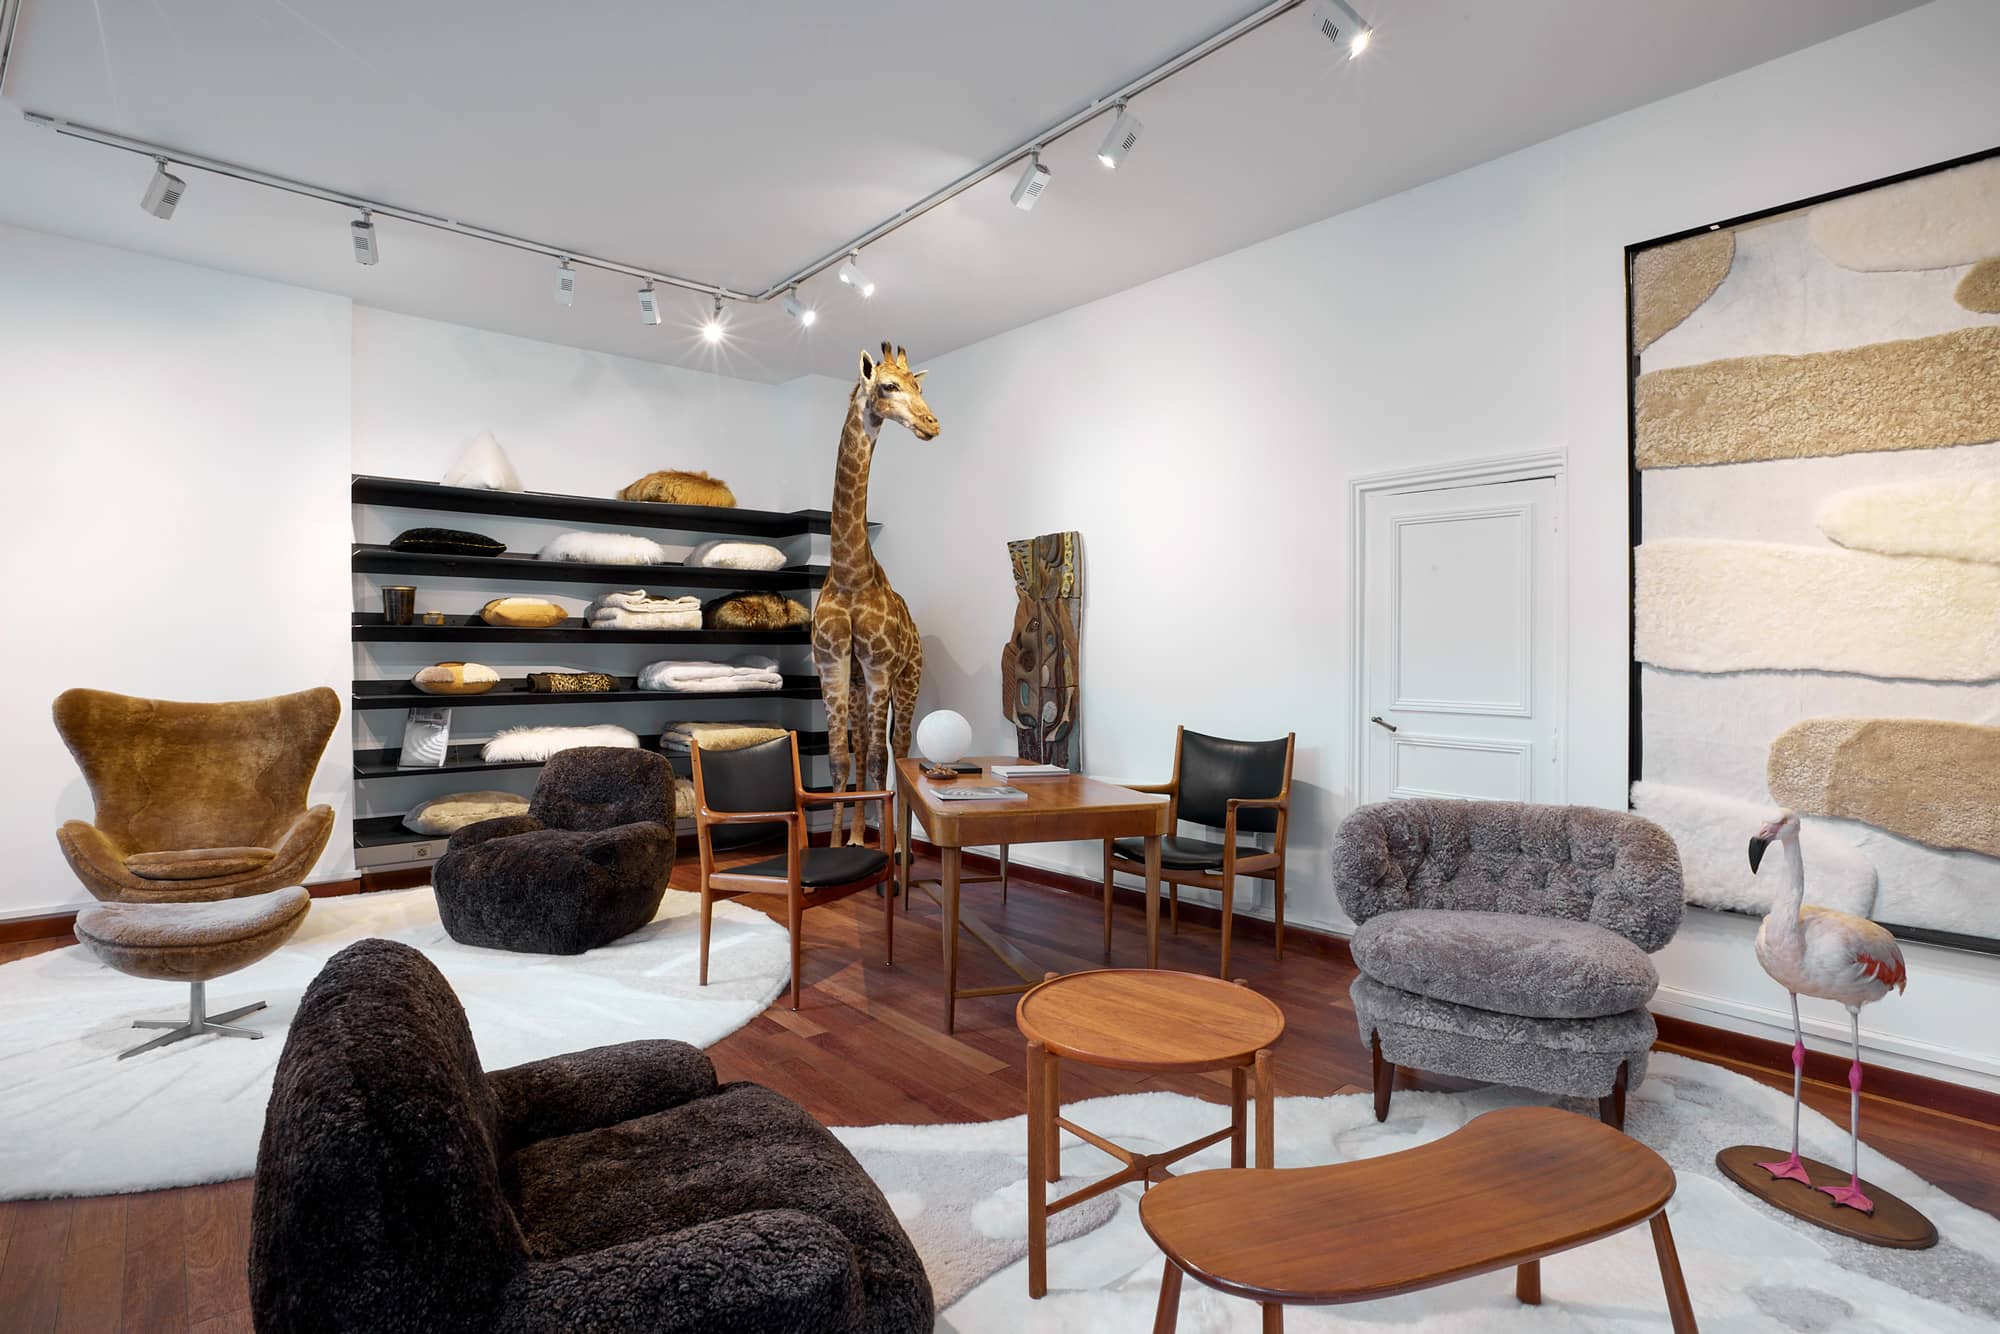 Showroom Paris Norki Gallery, vintage furniture and cushions